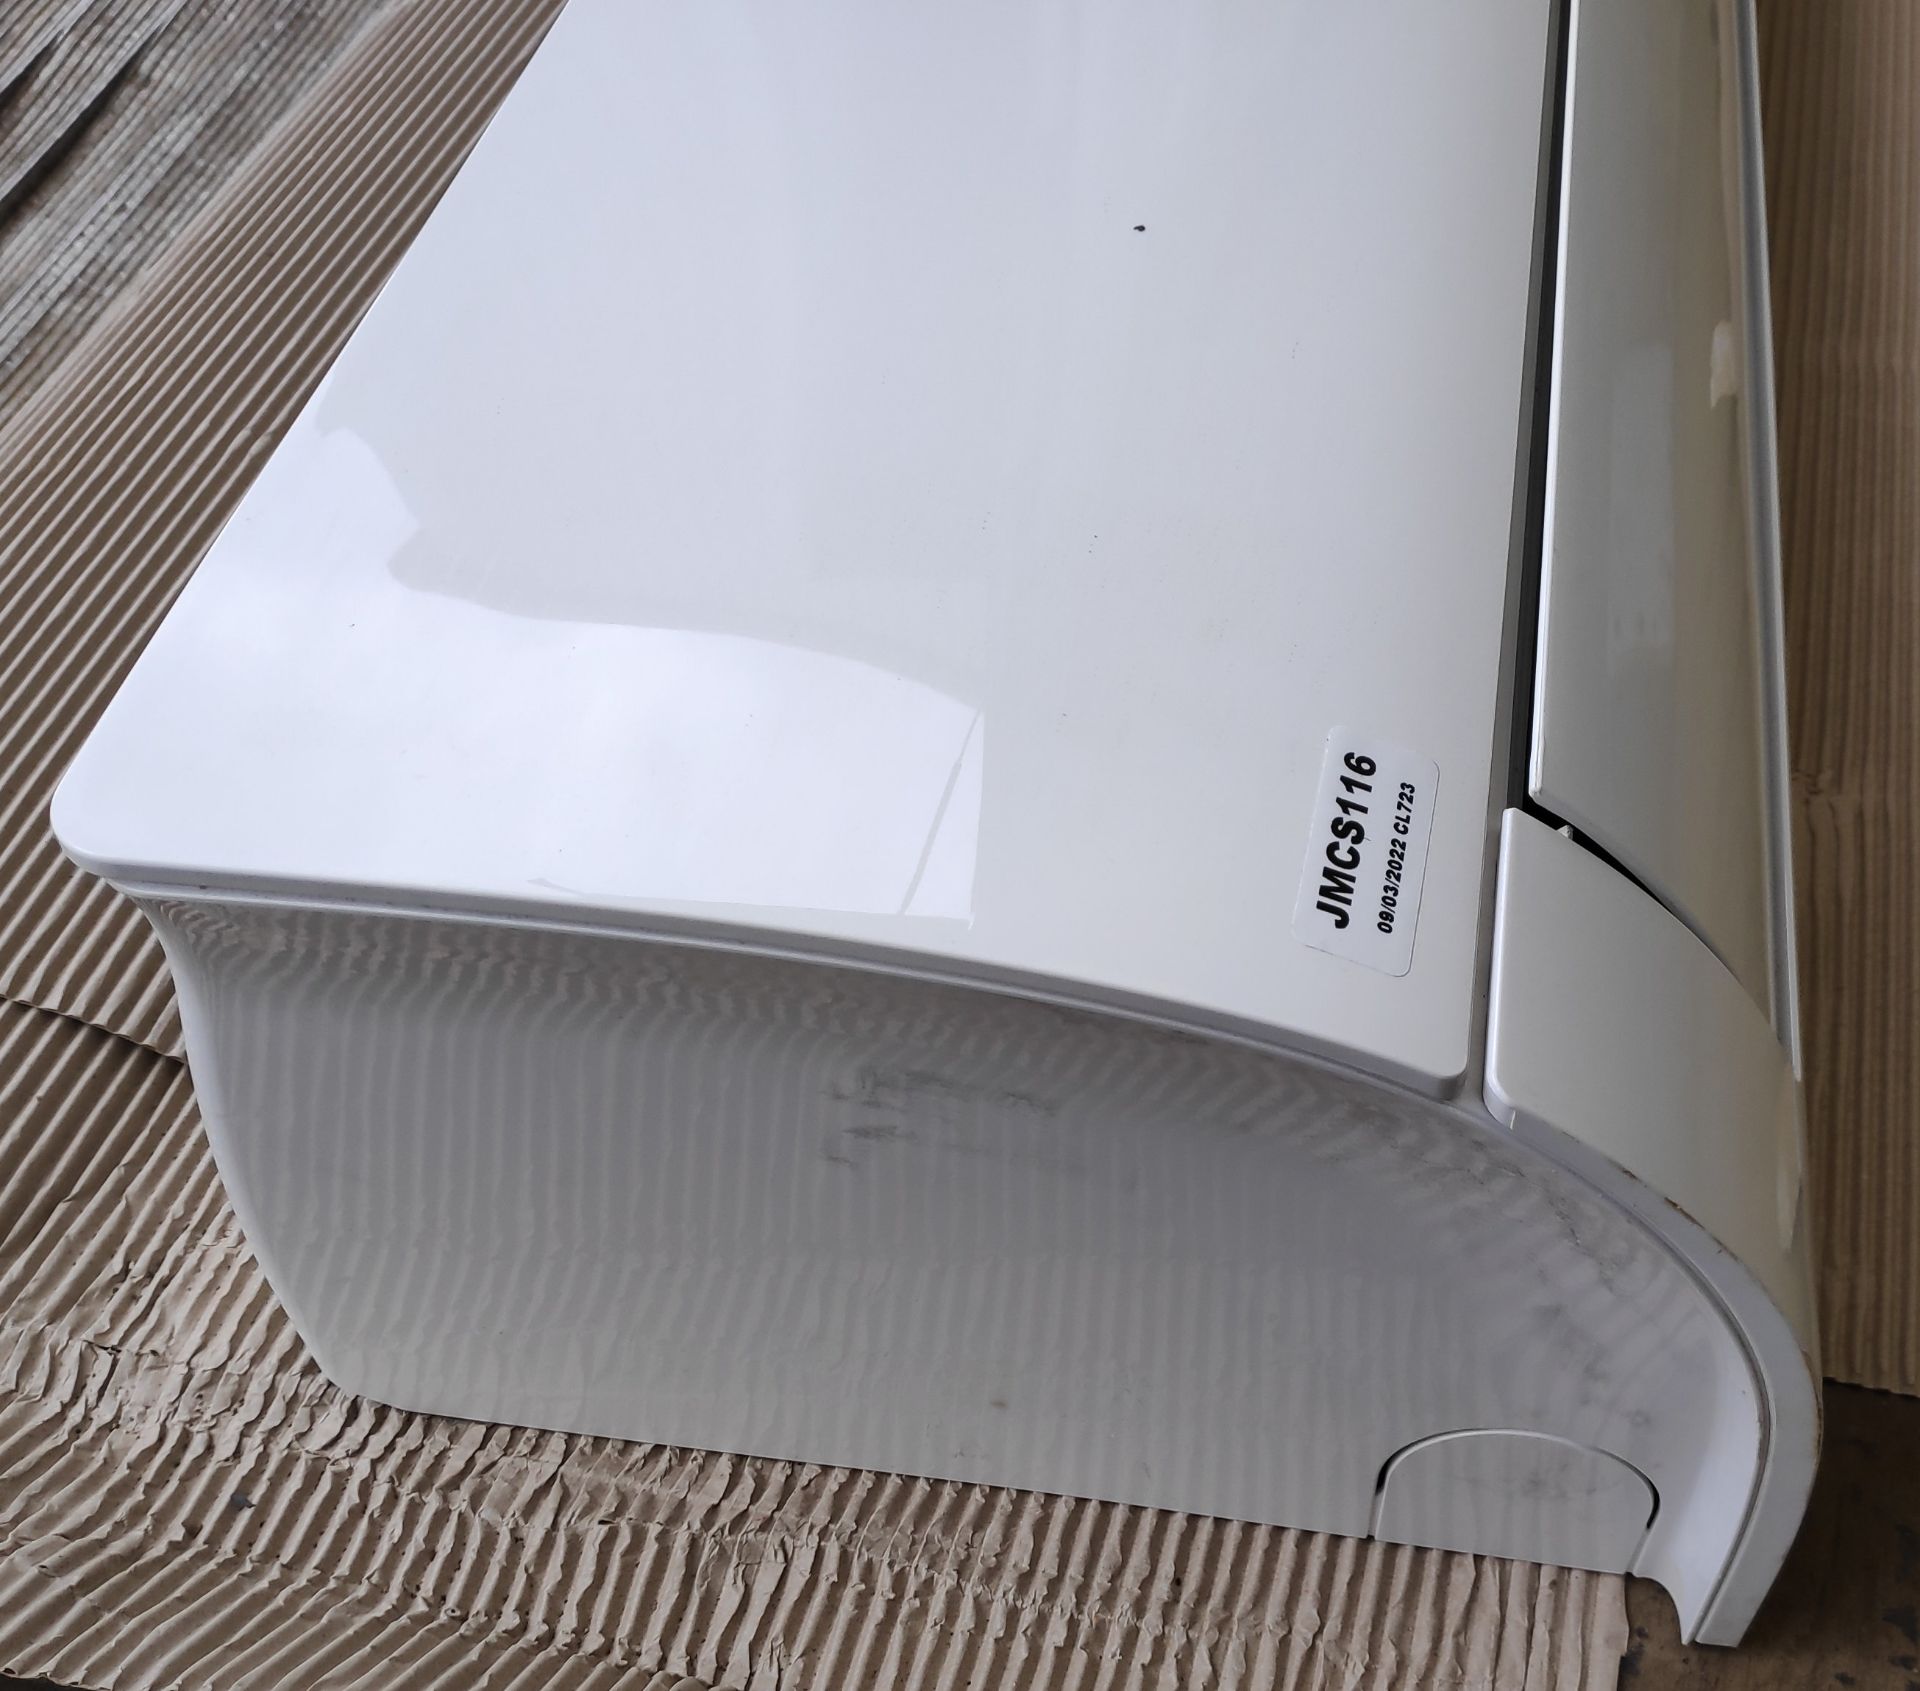 1 x LG Wall Mounted Air Conditioner Smart Inverter Indoor Unit - Model P18EN.NSK - JMCS116 - - Image 5 of 10